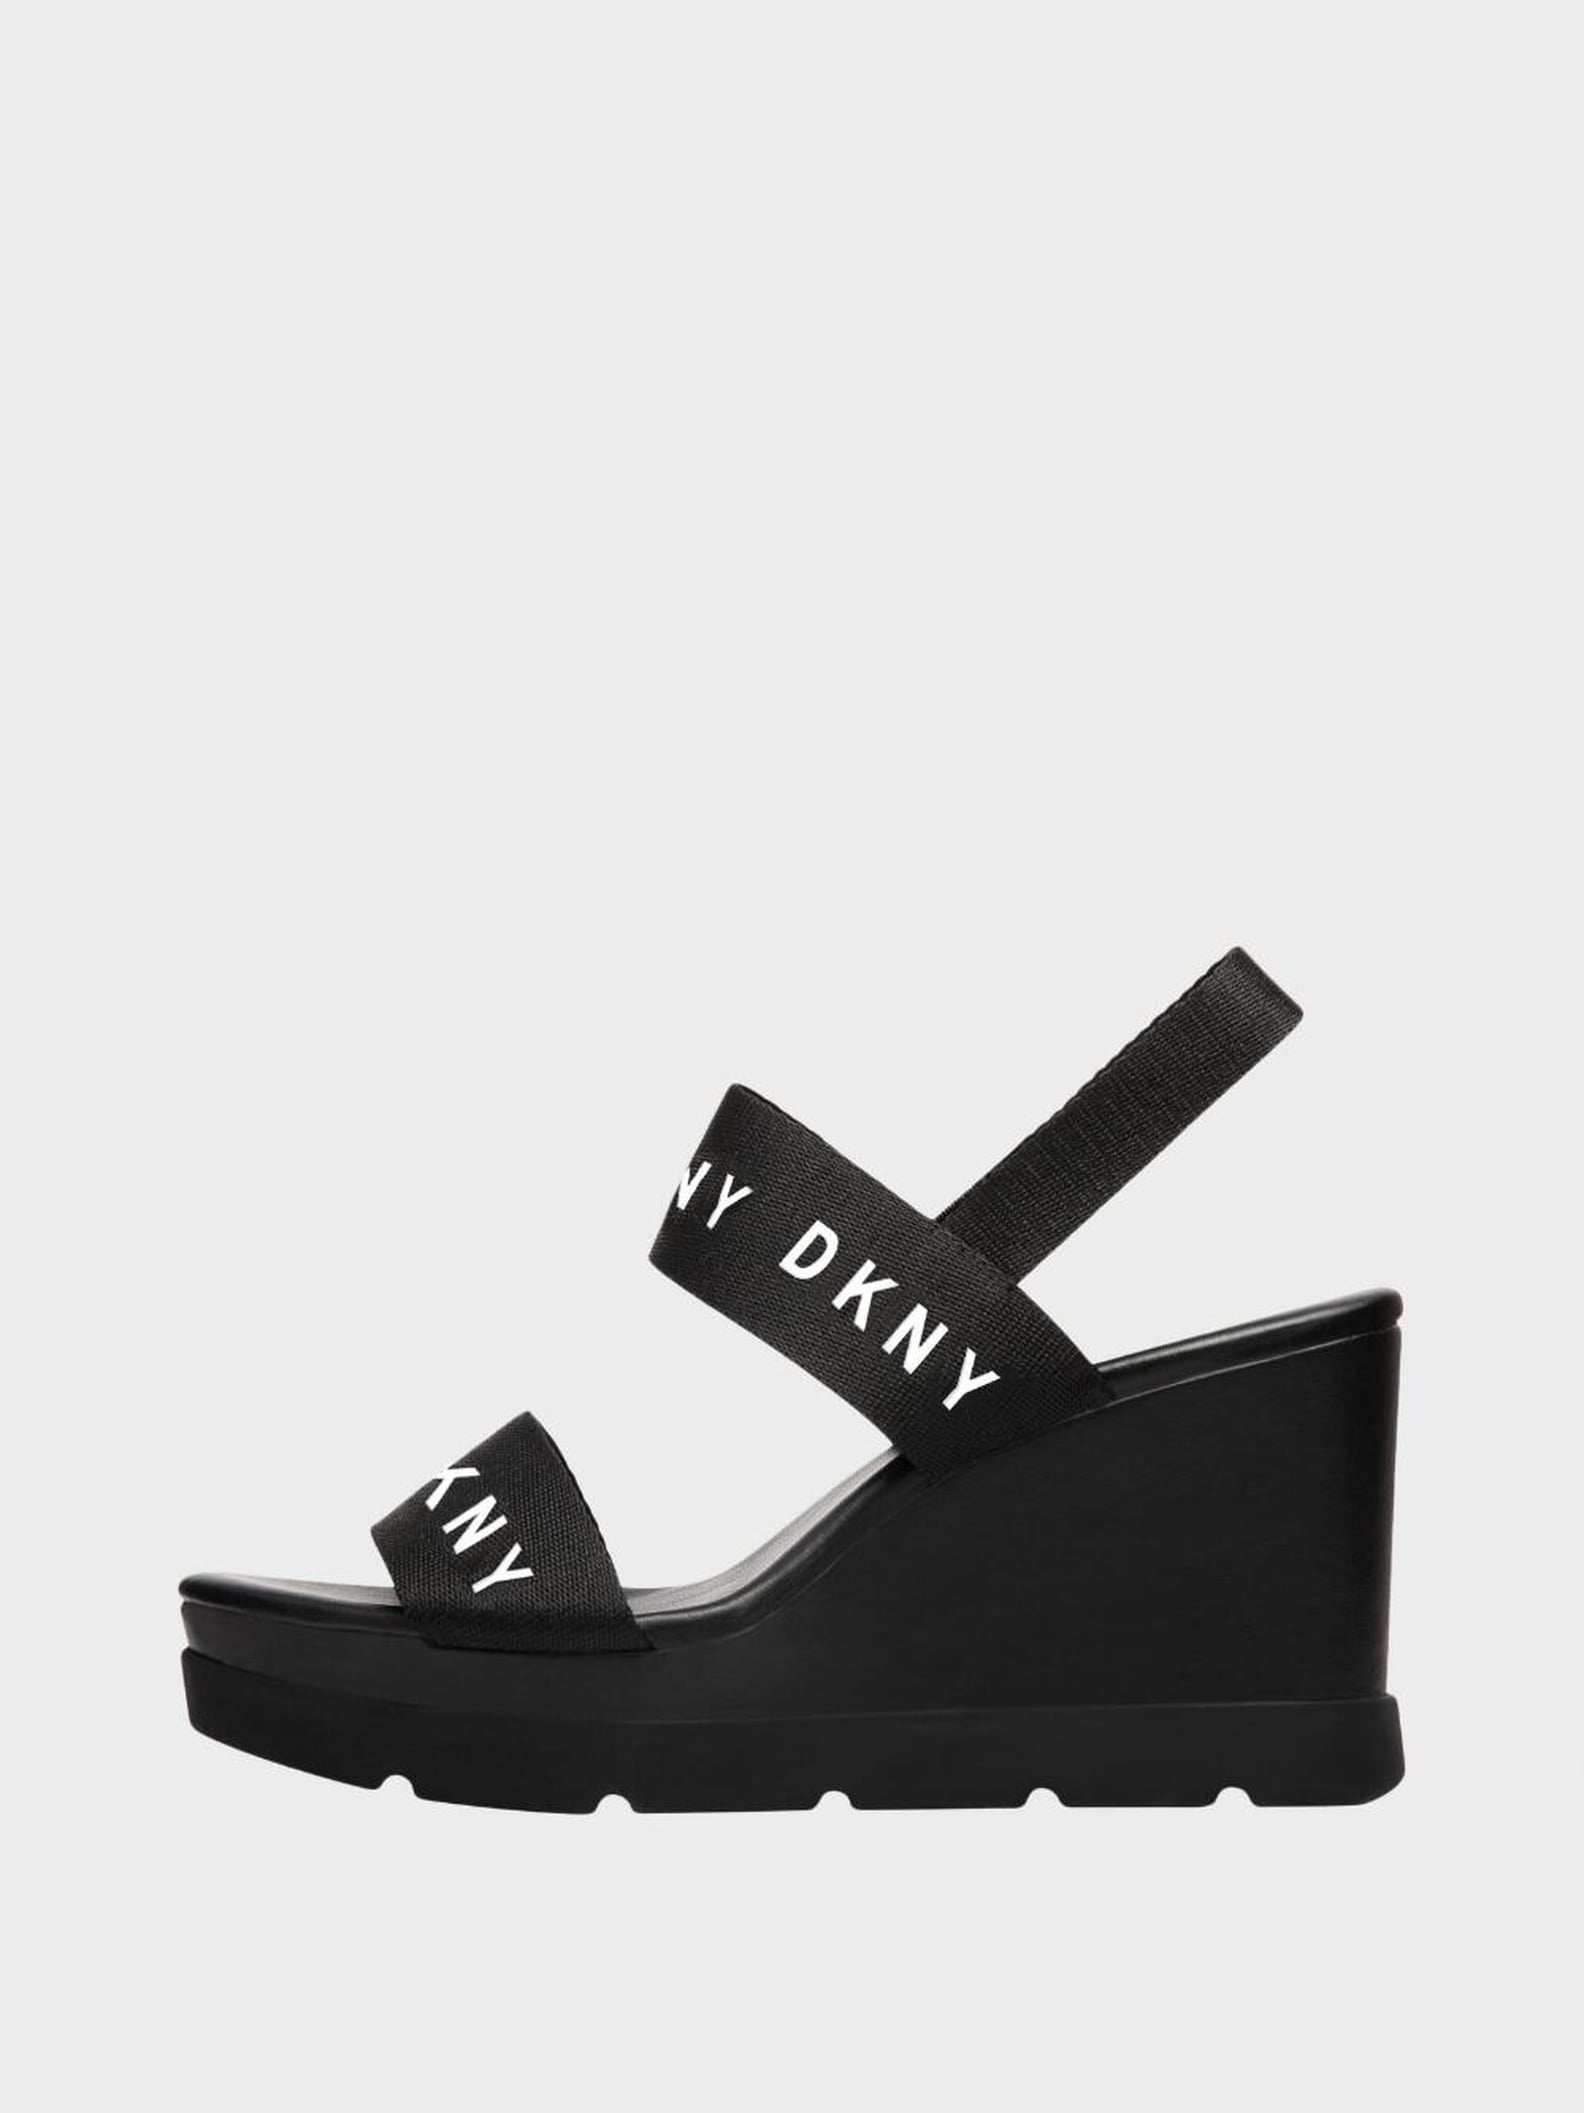 Mary-Kate Olsen Platform Sandals | POPSUGAR Fashion